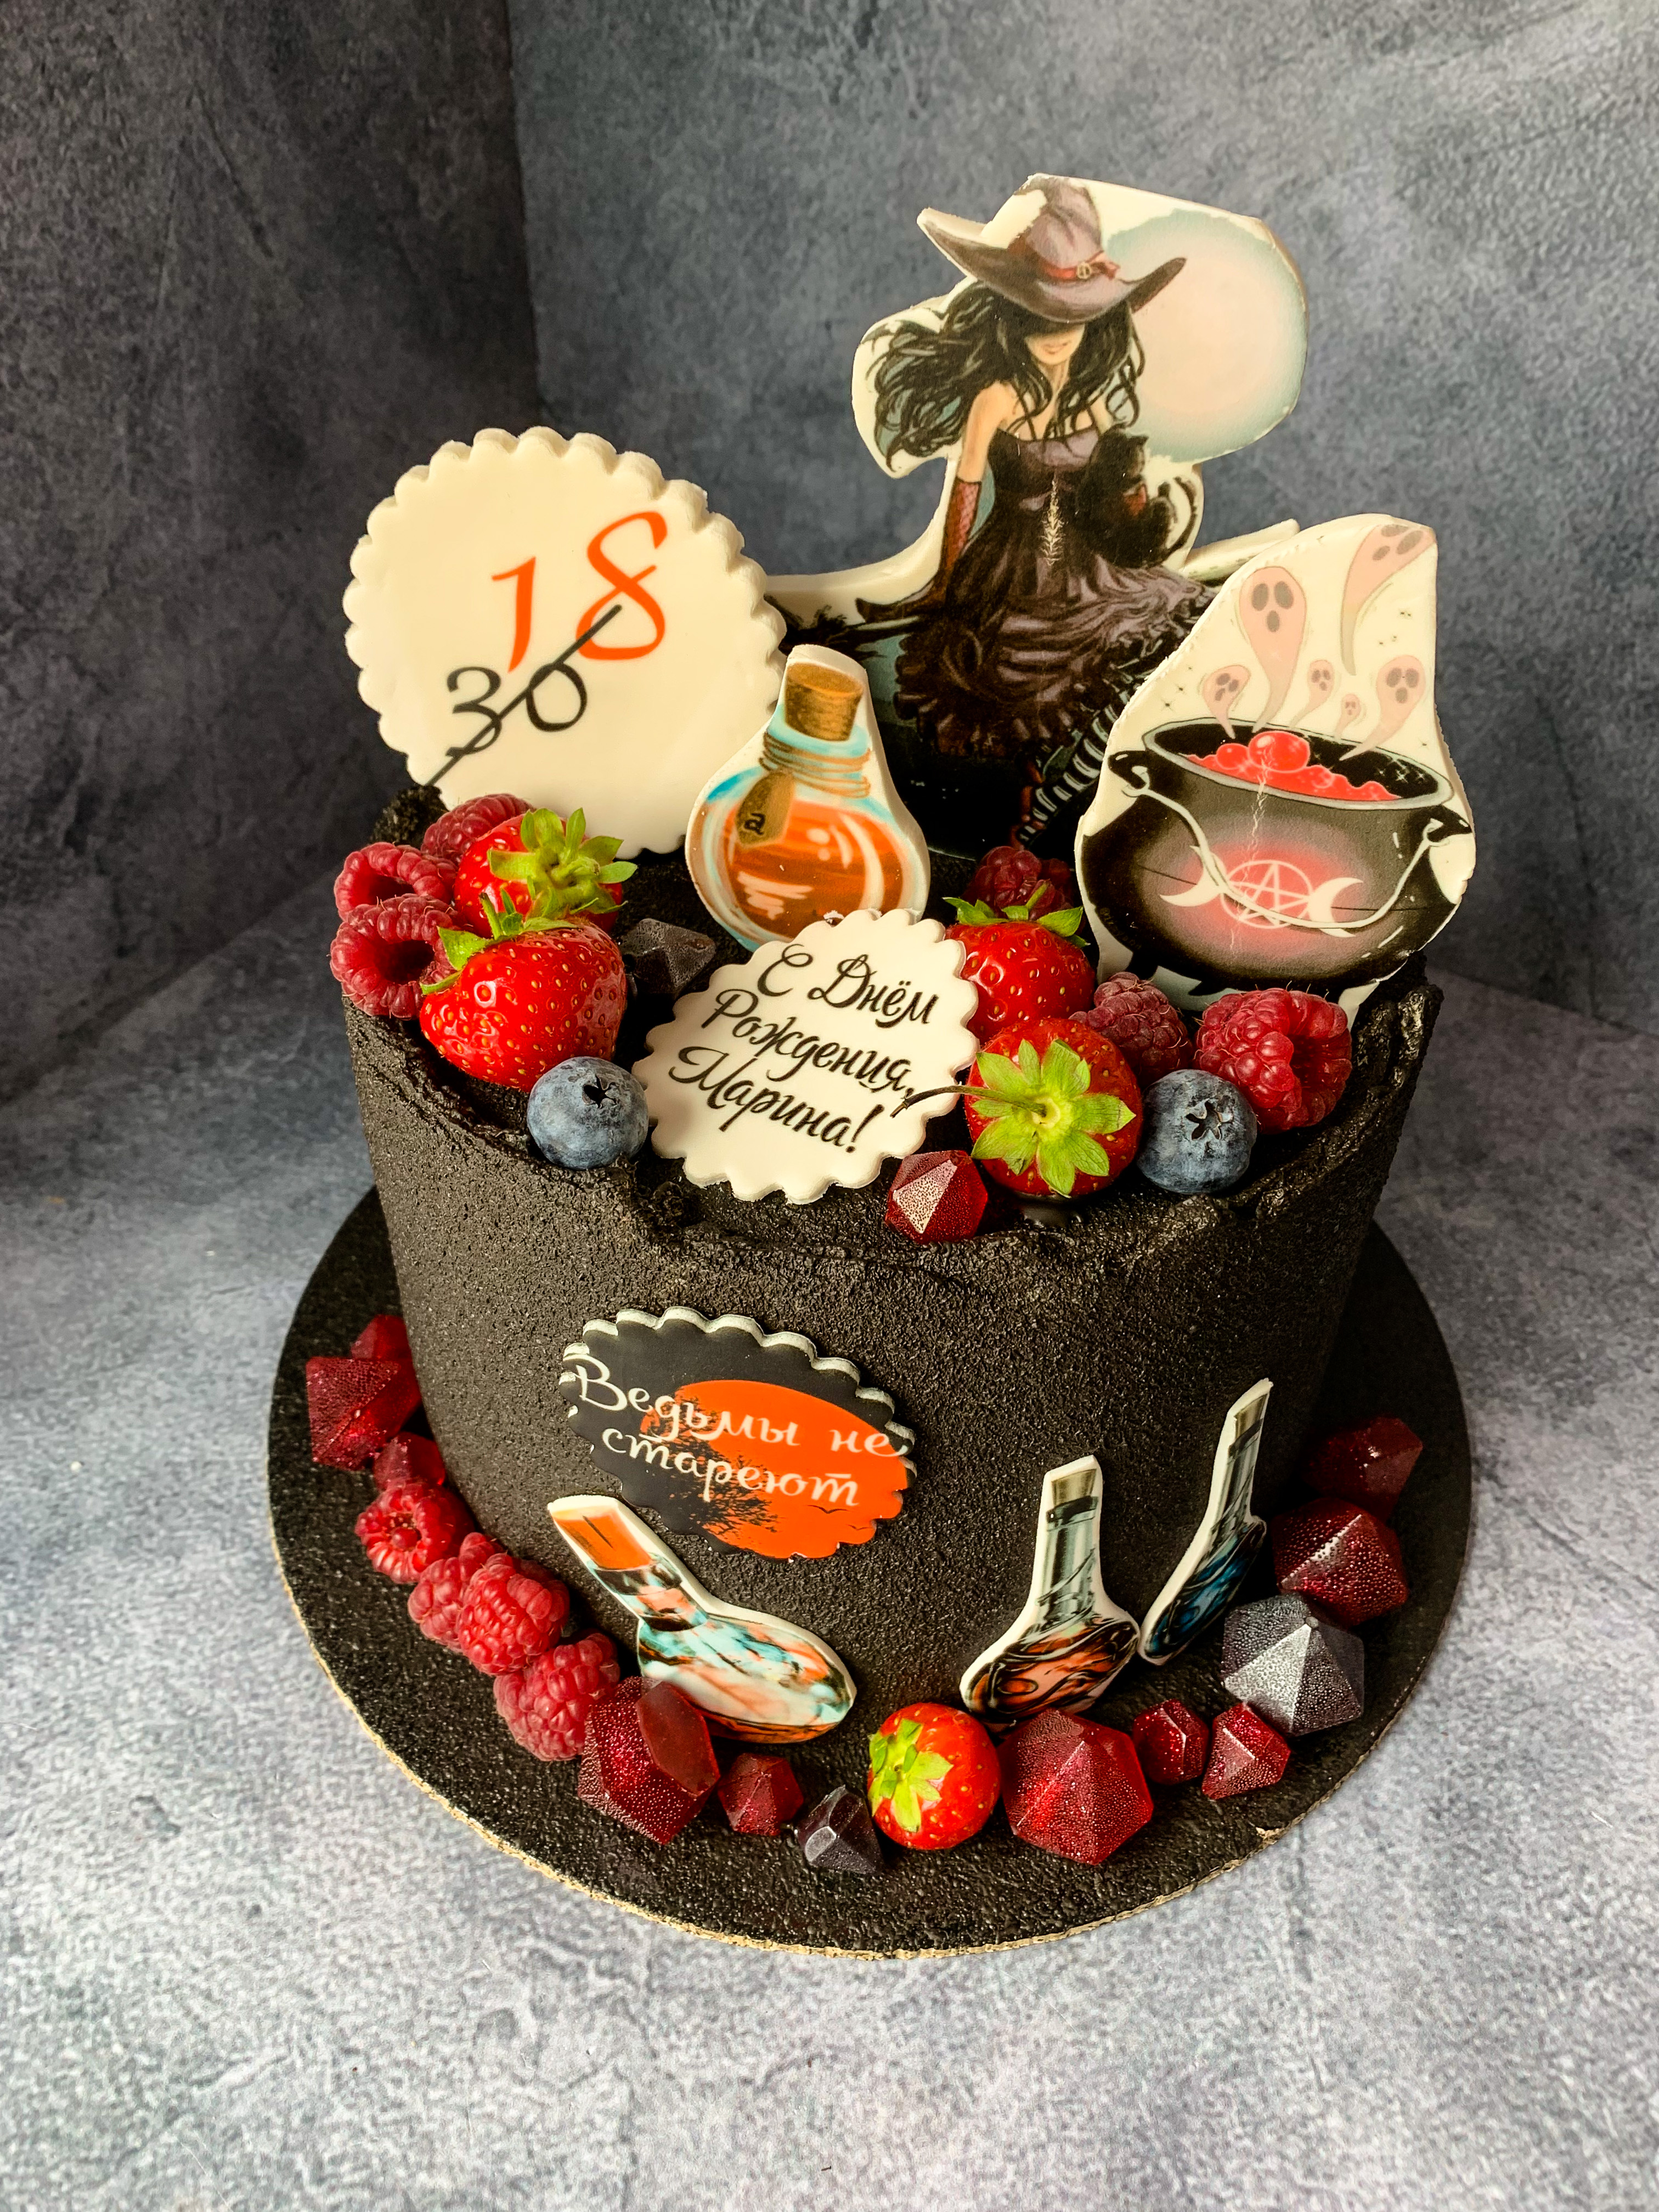 Торт "Ведьмы не стареют" на заказ от CakeMosCake